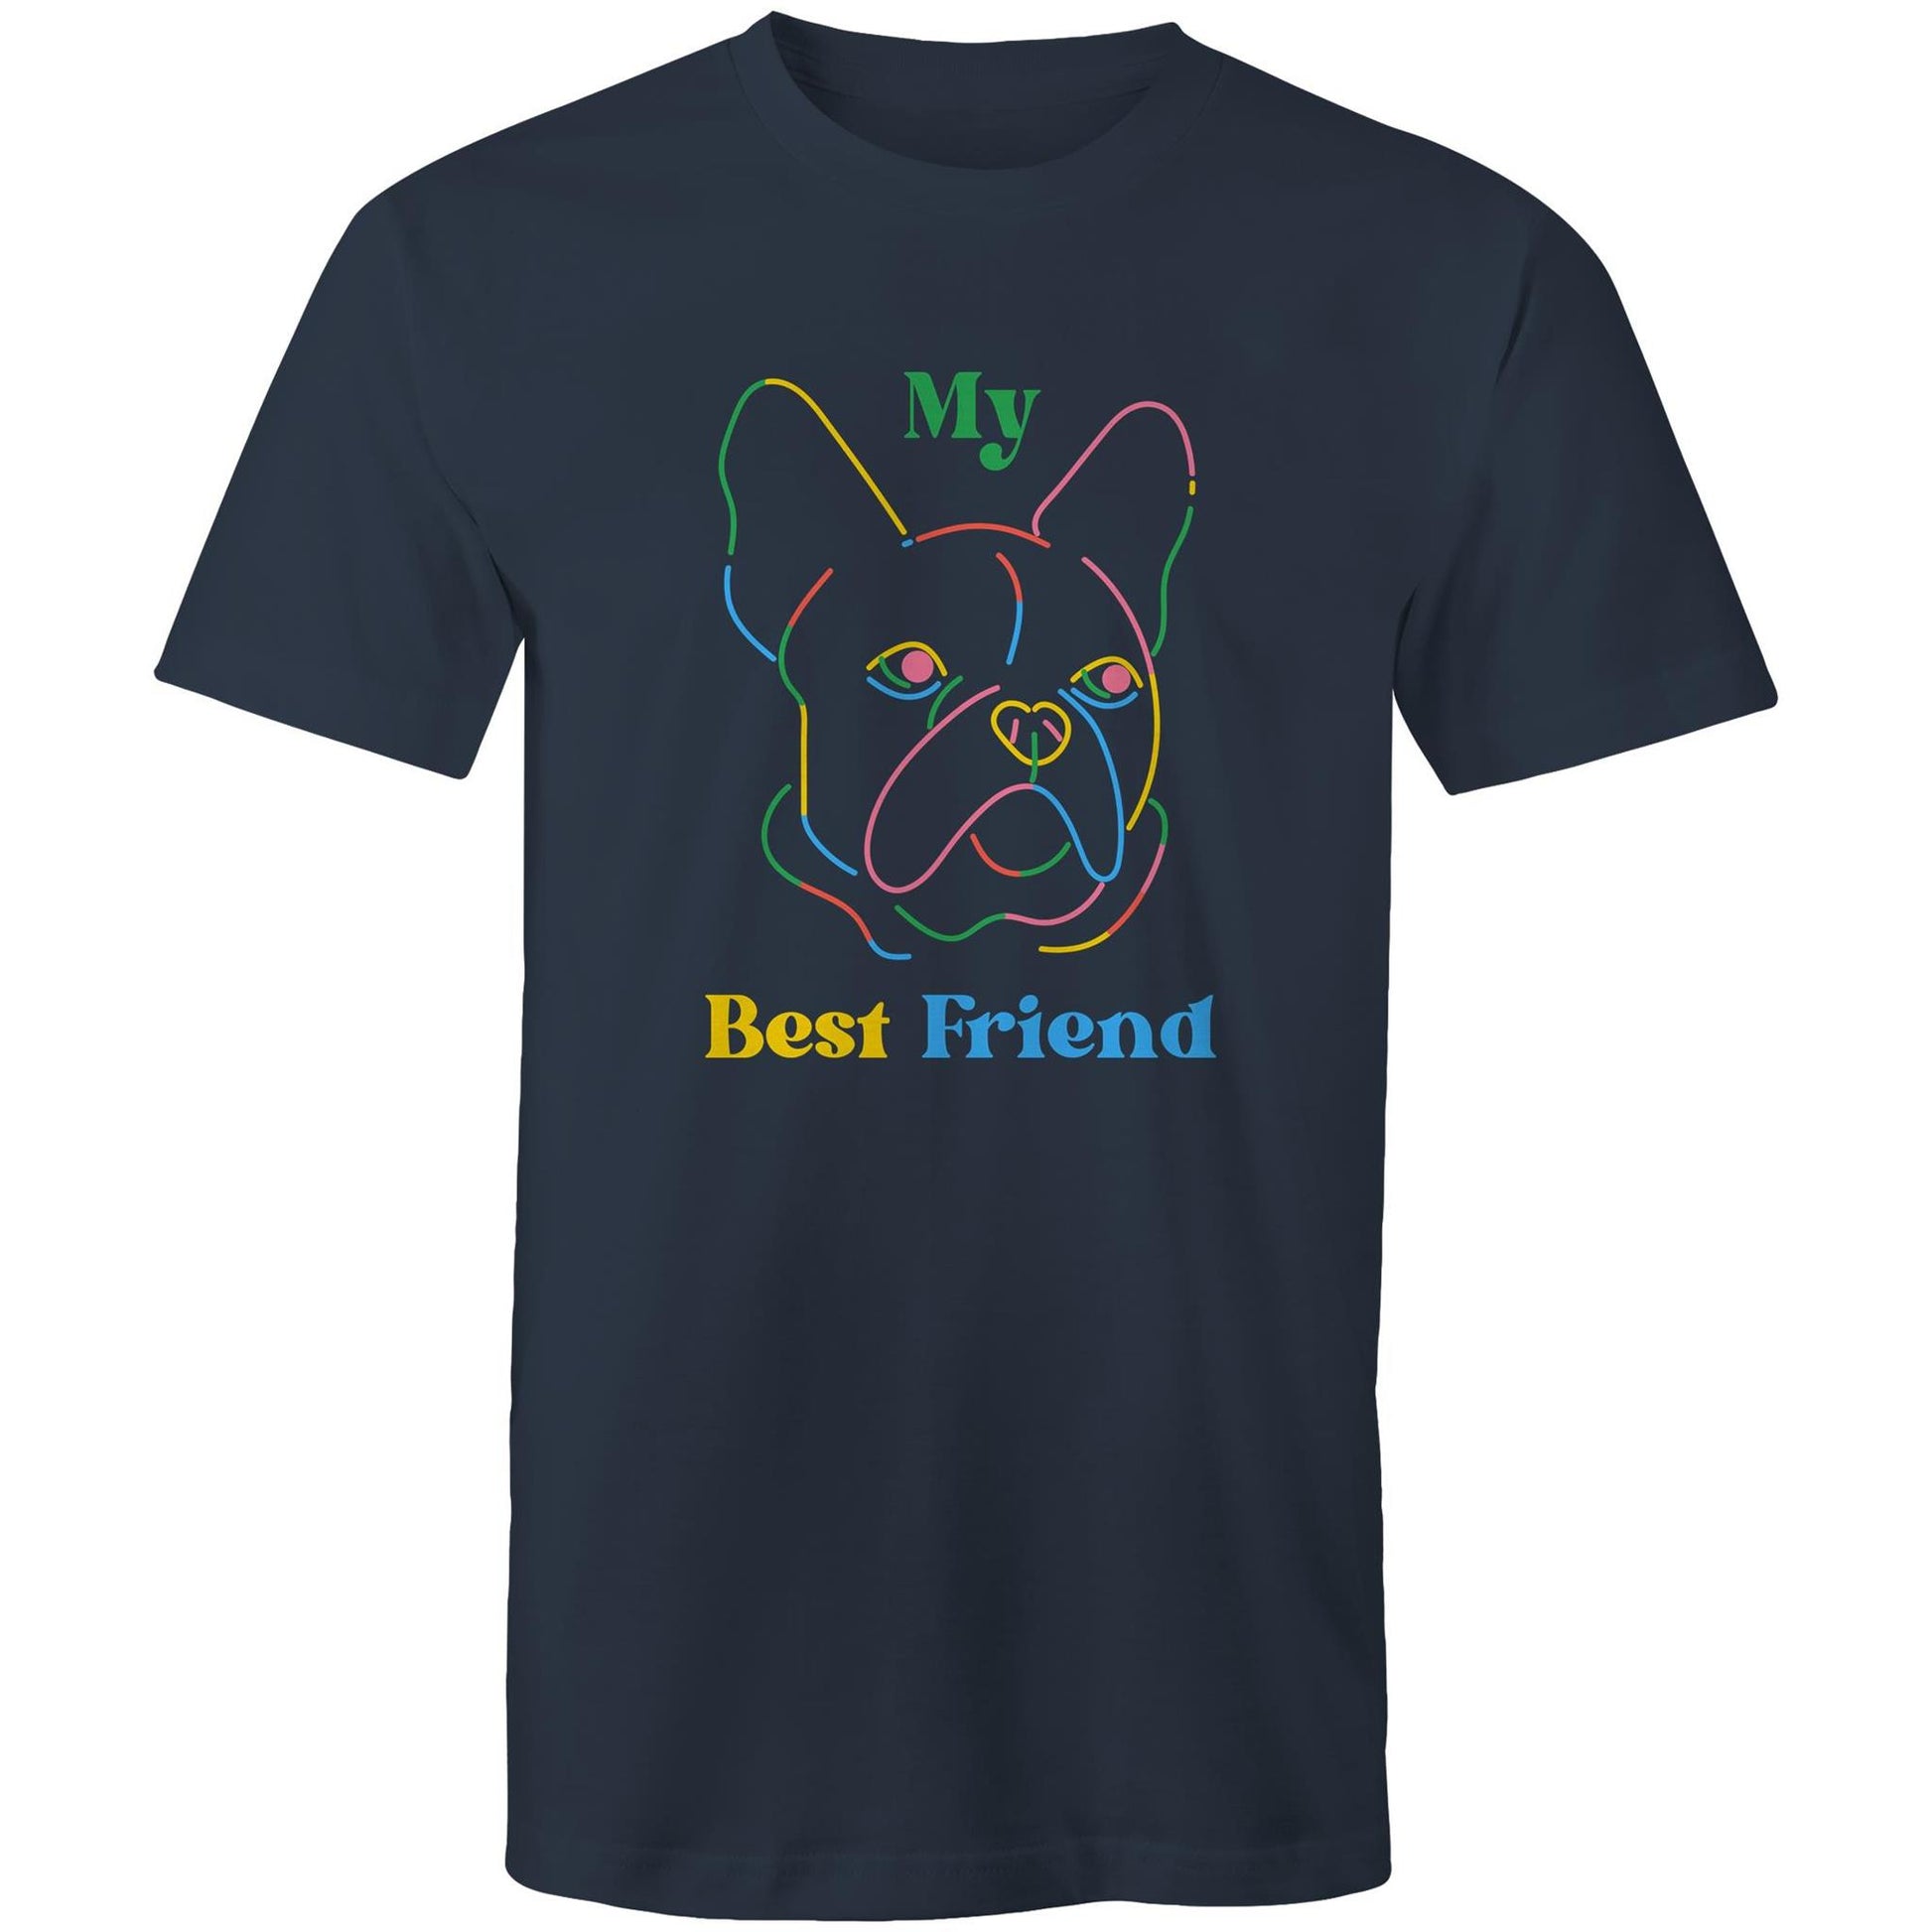 My Best Friend, Dog - Mens T-Shirt Navy Mens T-shirt animal